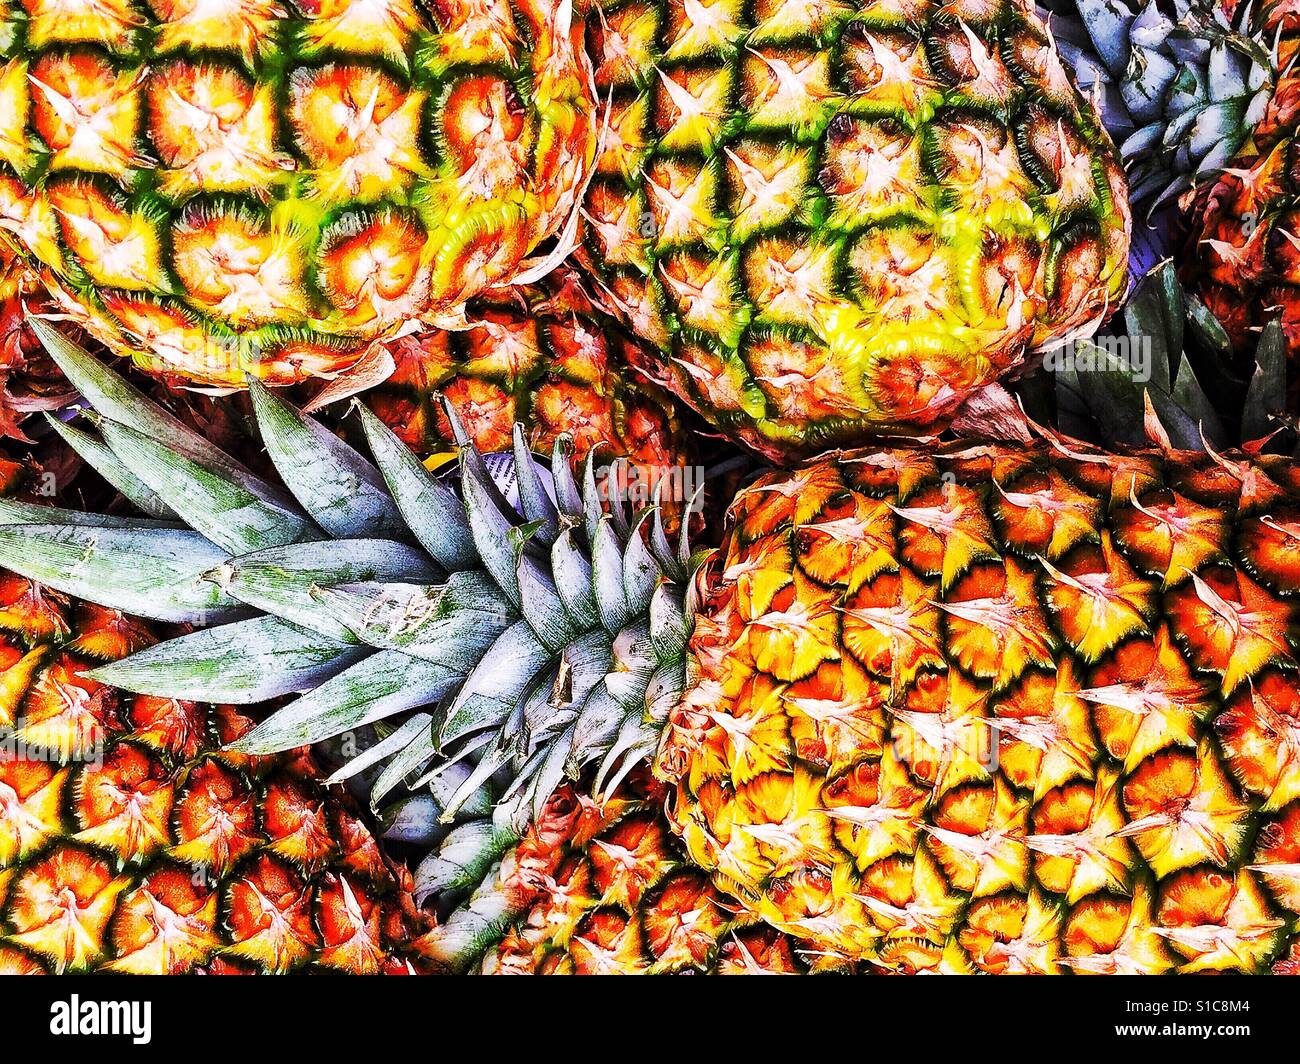 Luscious Pineapples at Market Stock Photo